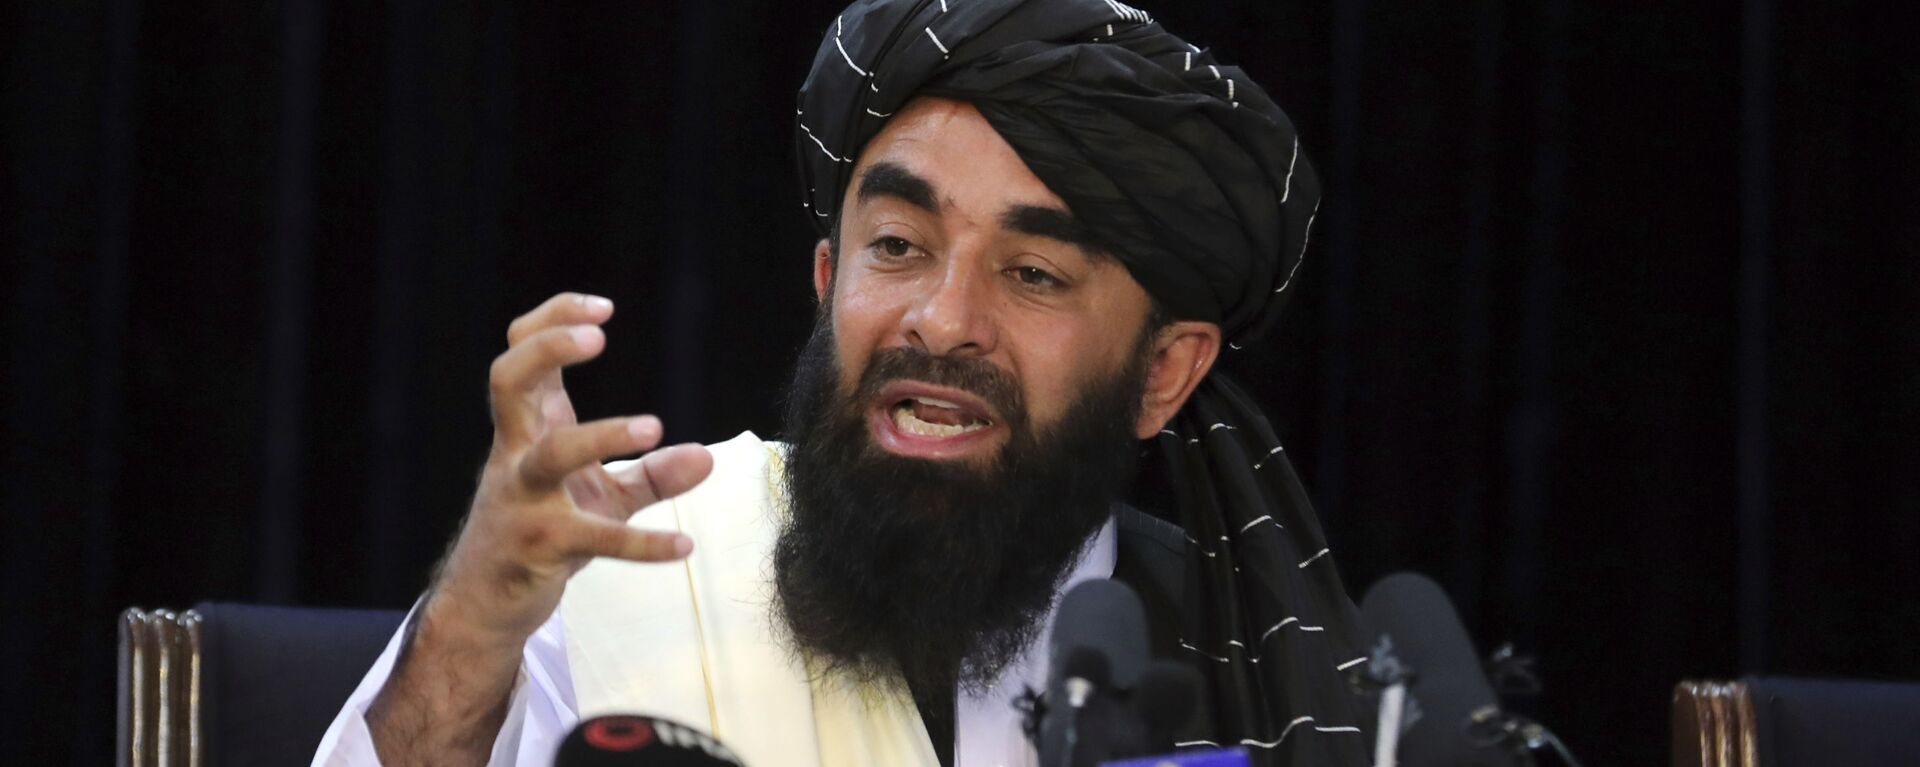 Представитель Талибана Забихулла Муджахид на пресс-конференции в Кабуле, Афганистан  - اسپوتنیک افغانستان  , 1920, 05.10.2021